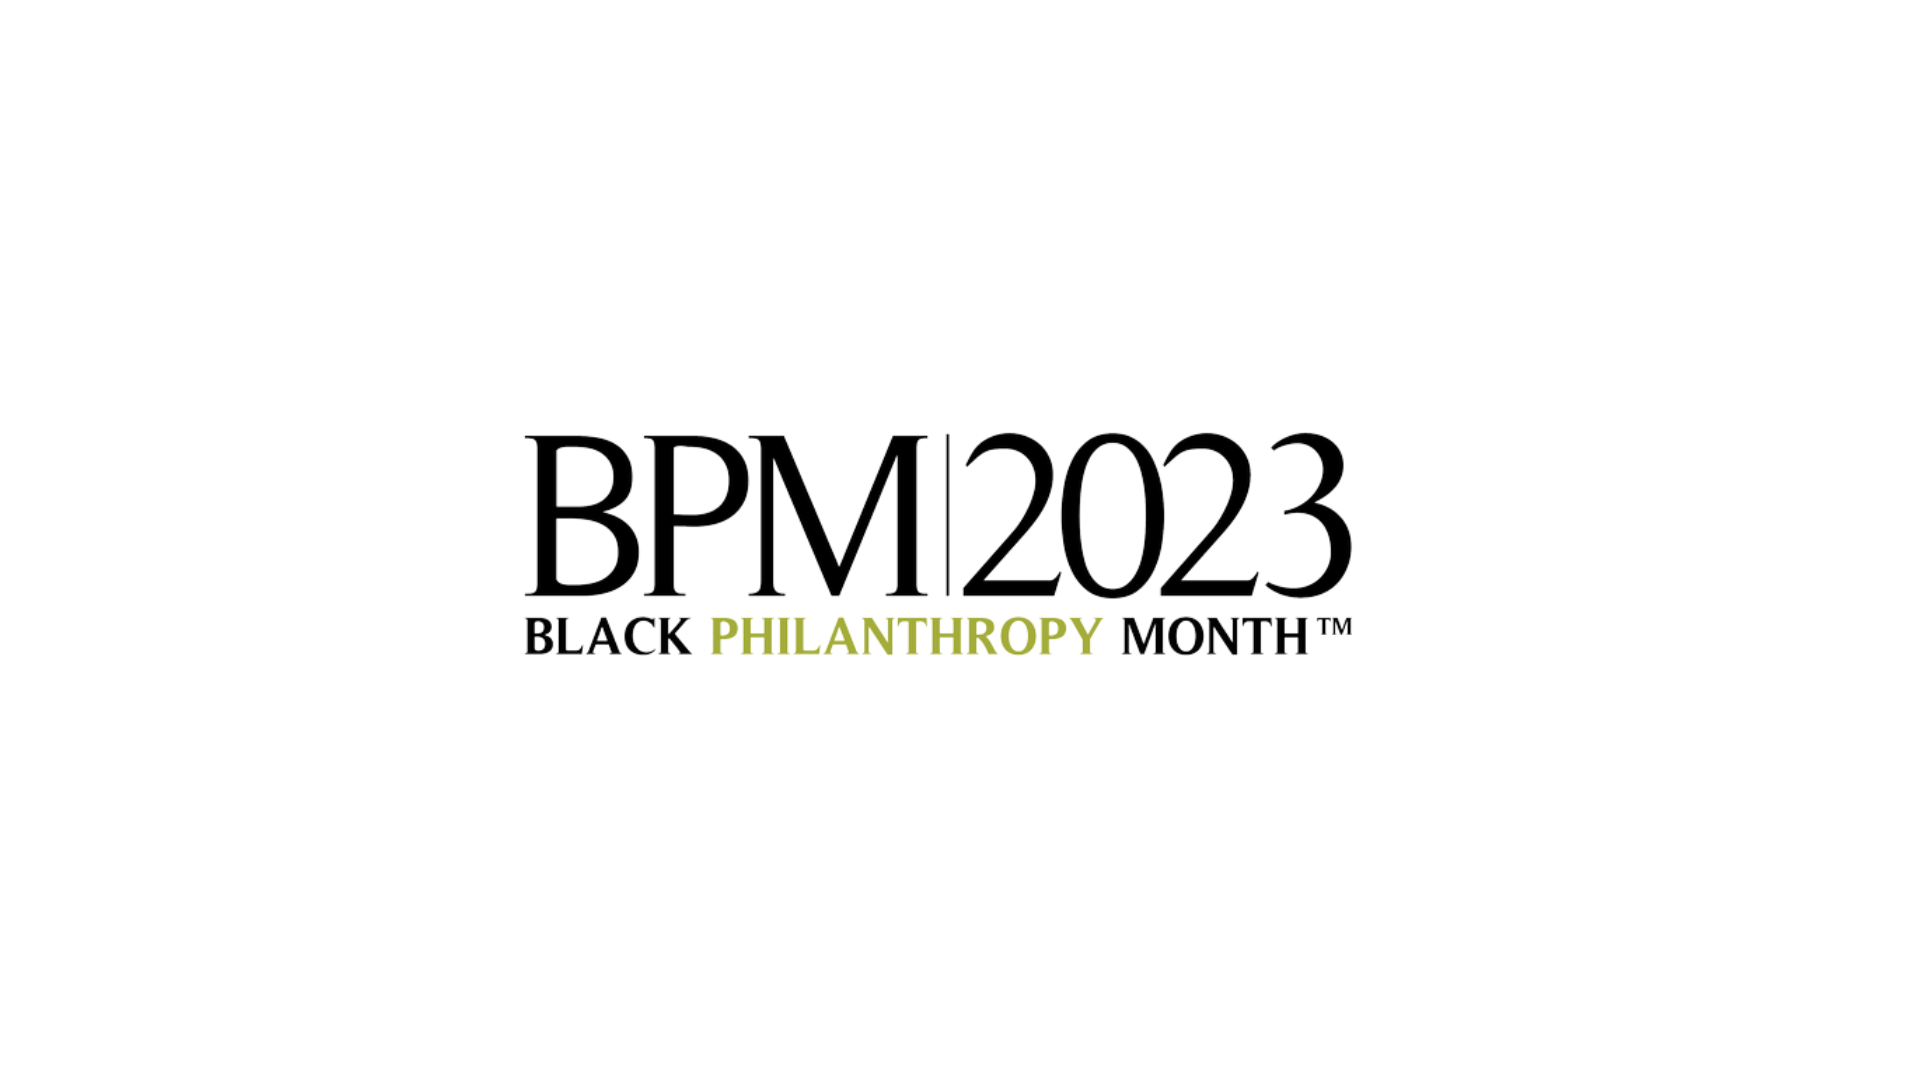 Black Philanthropy Month 24/7